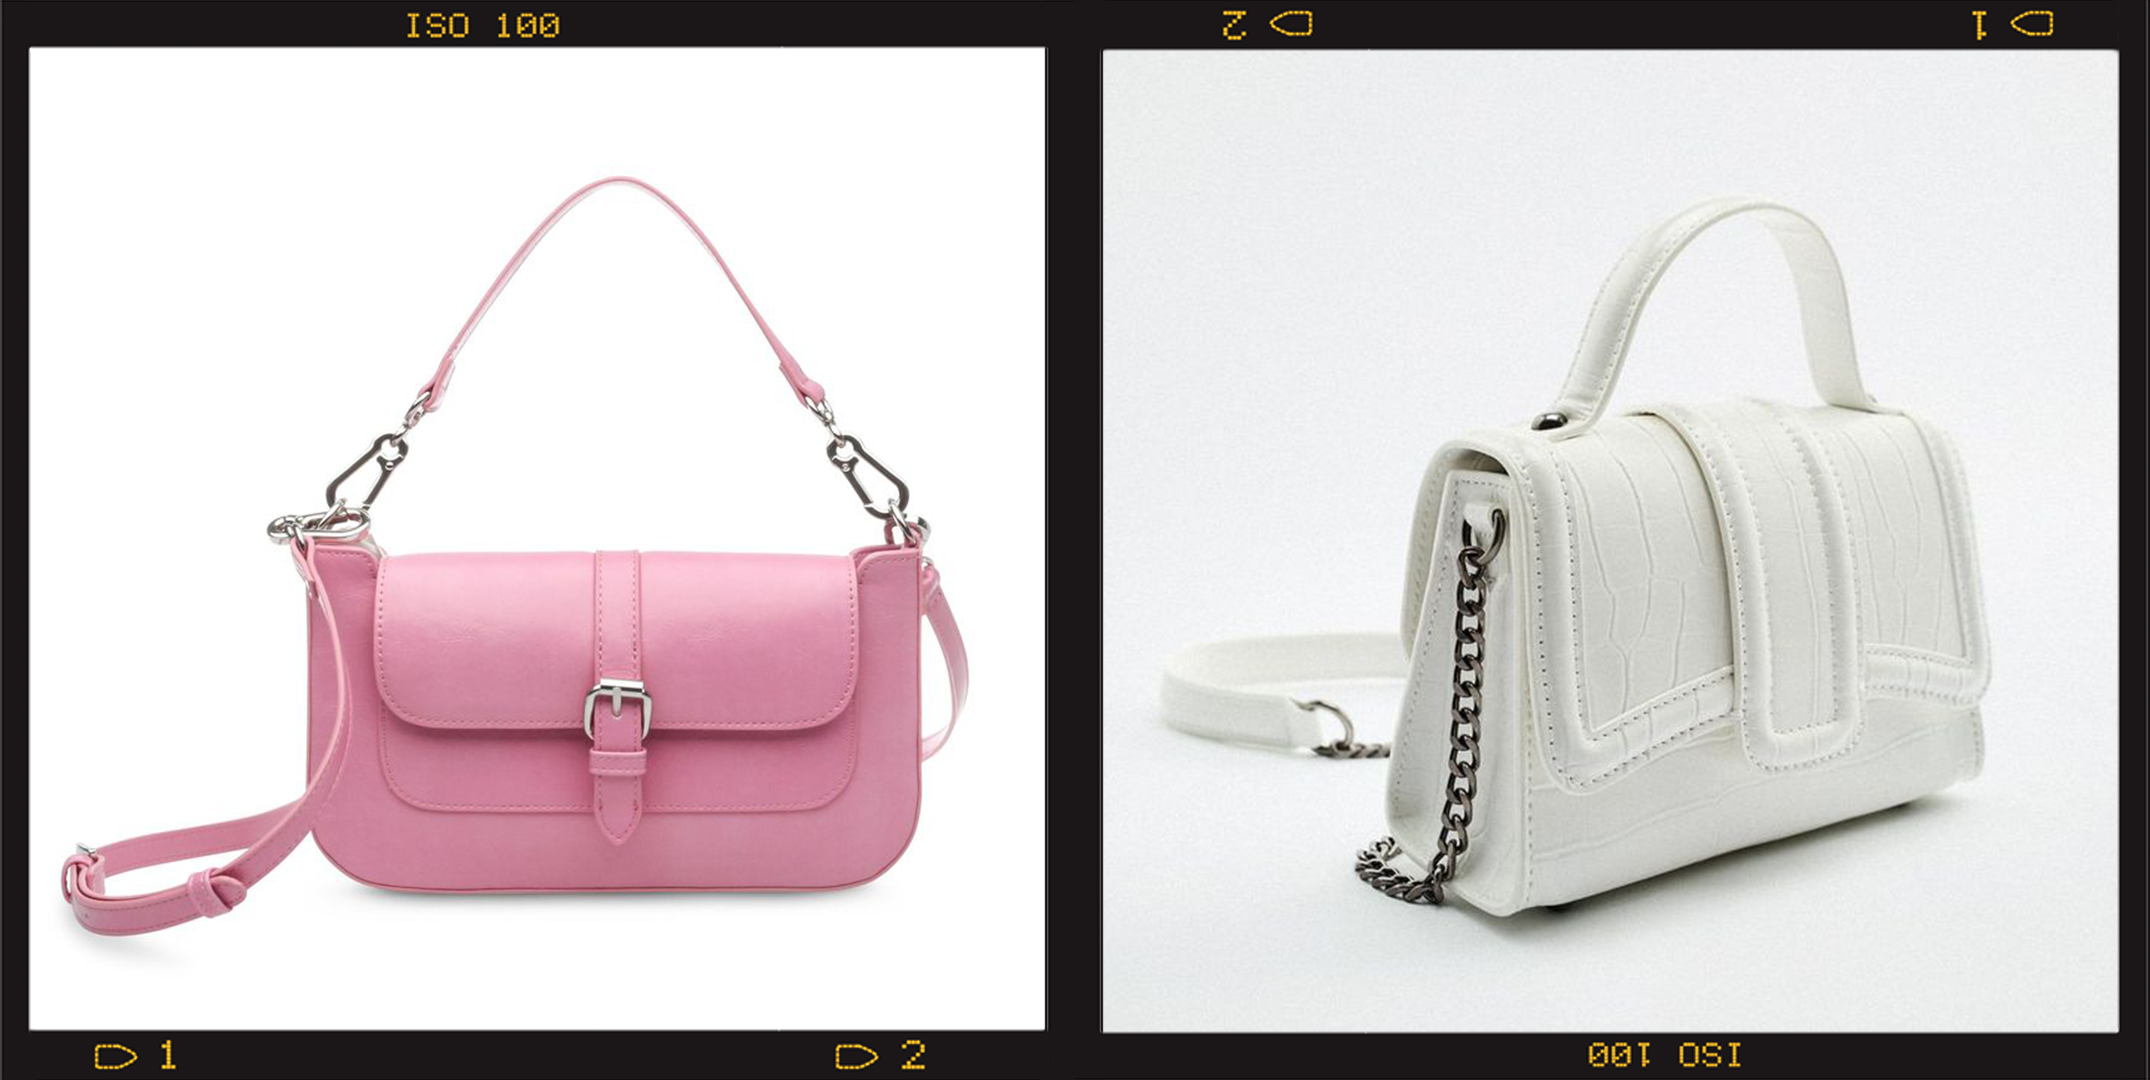 Pastel Two-Tone Tote Bag - Designer Handbag for Women - Daily Essential - PU Leather - Faux Leather - Shoulder Bag